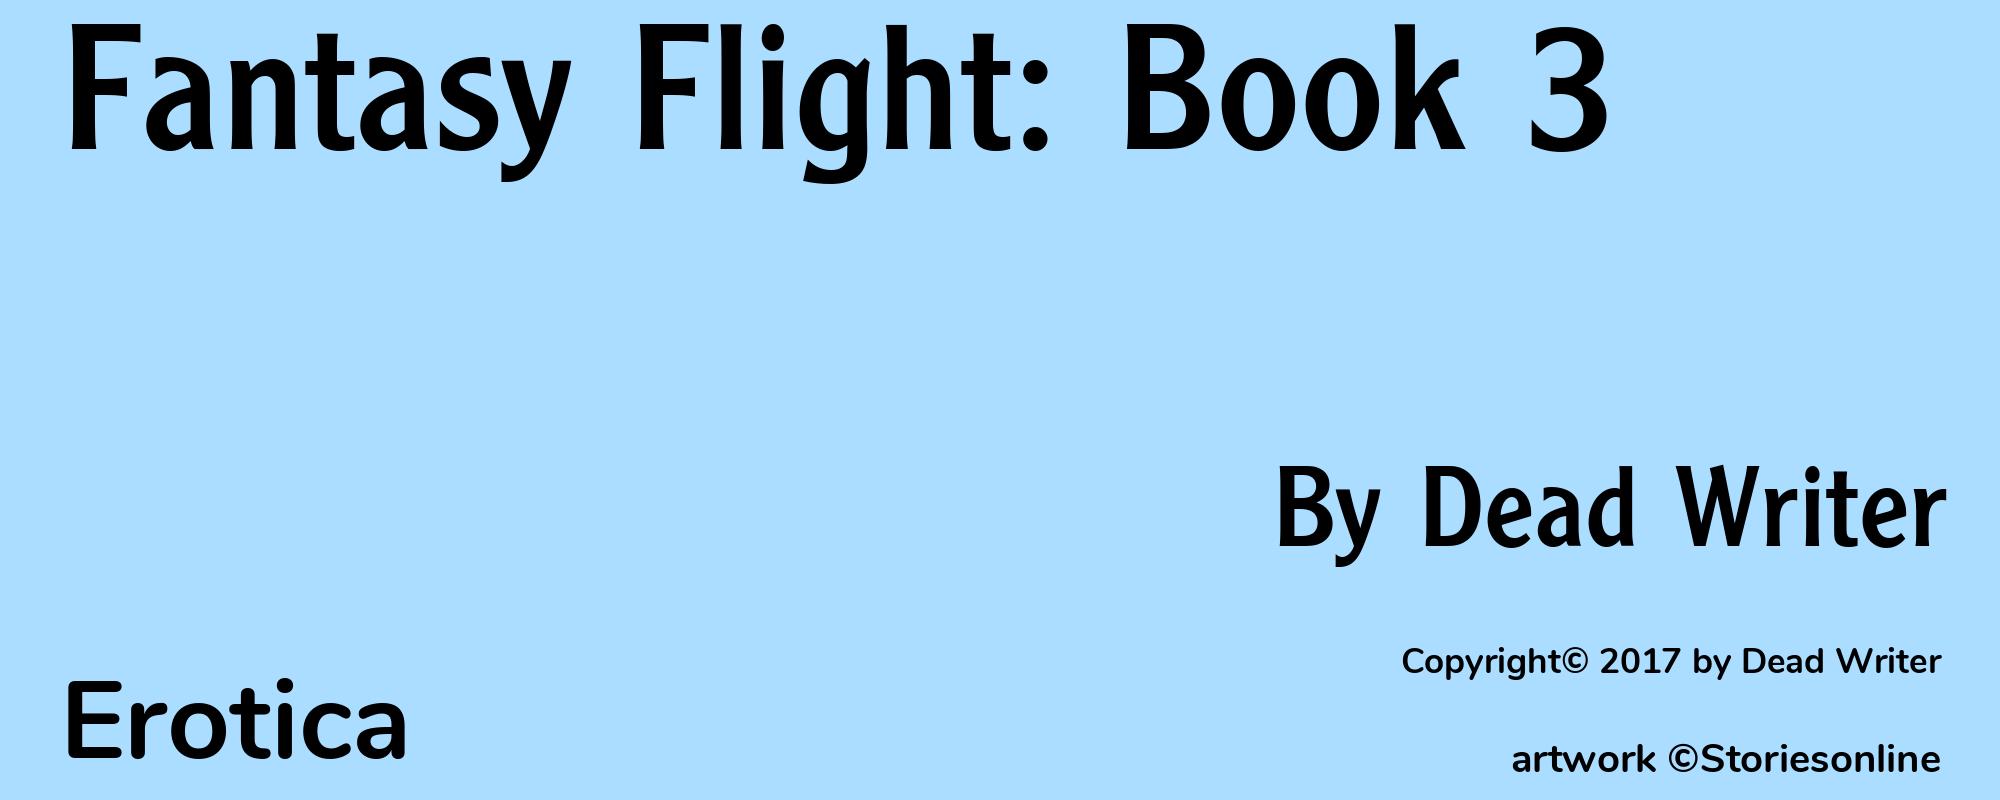 Fantasy Flight: Book 3 - Cover